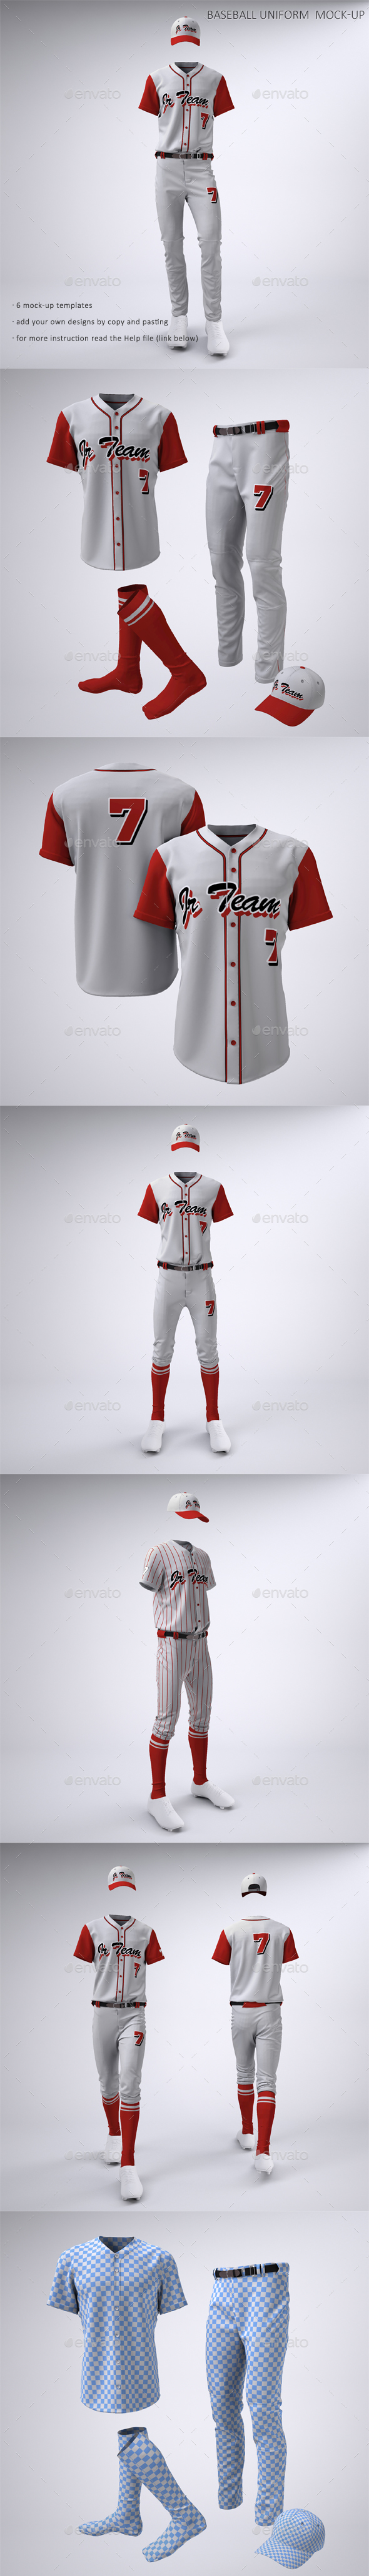 Design a Baseball jersey using a photoshop template 